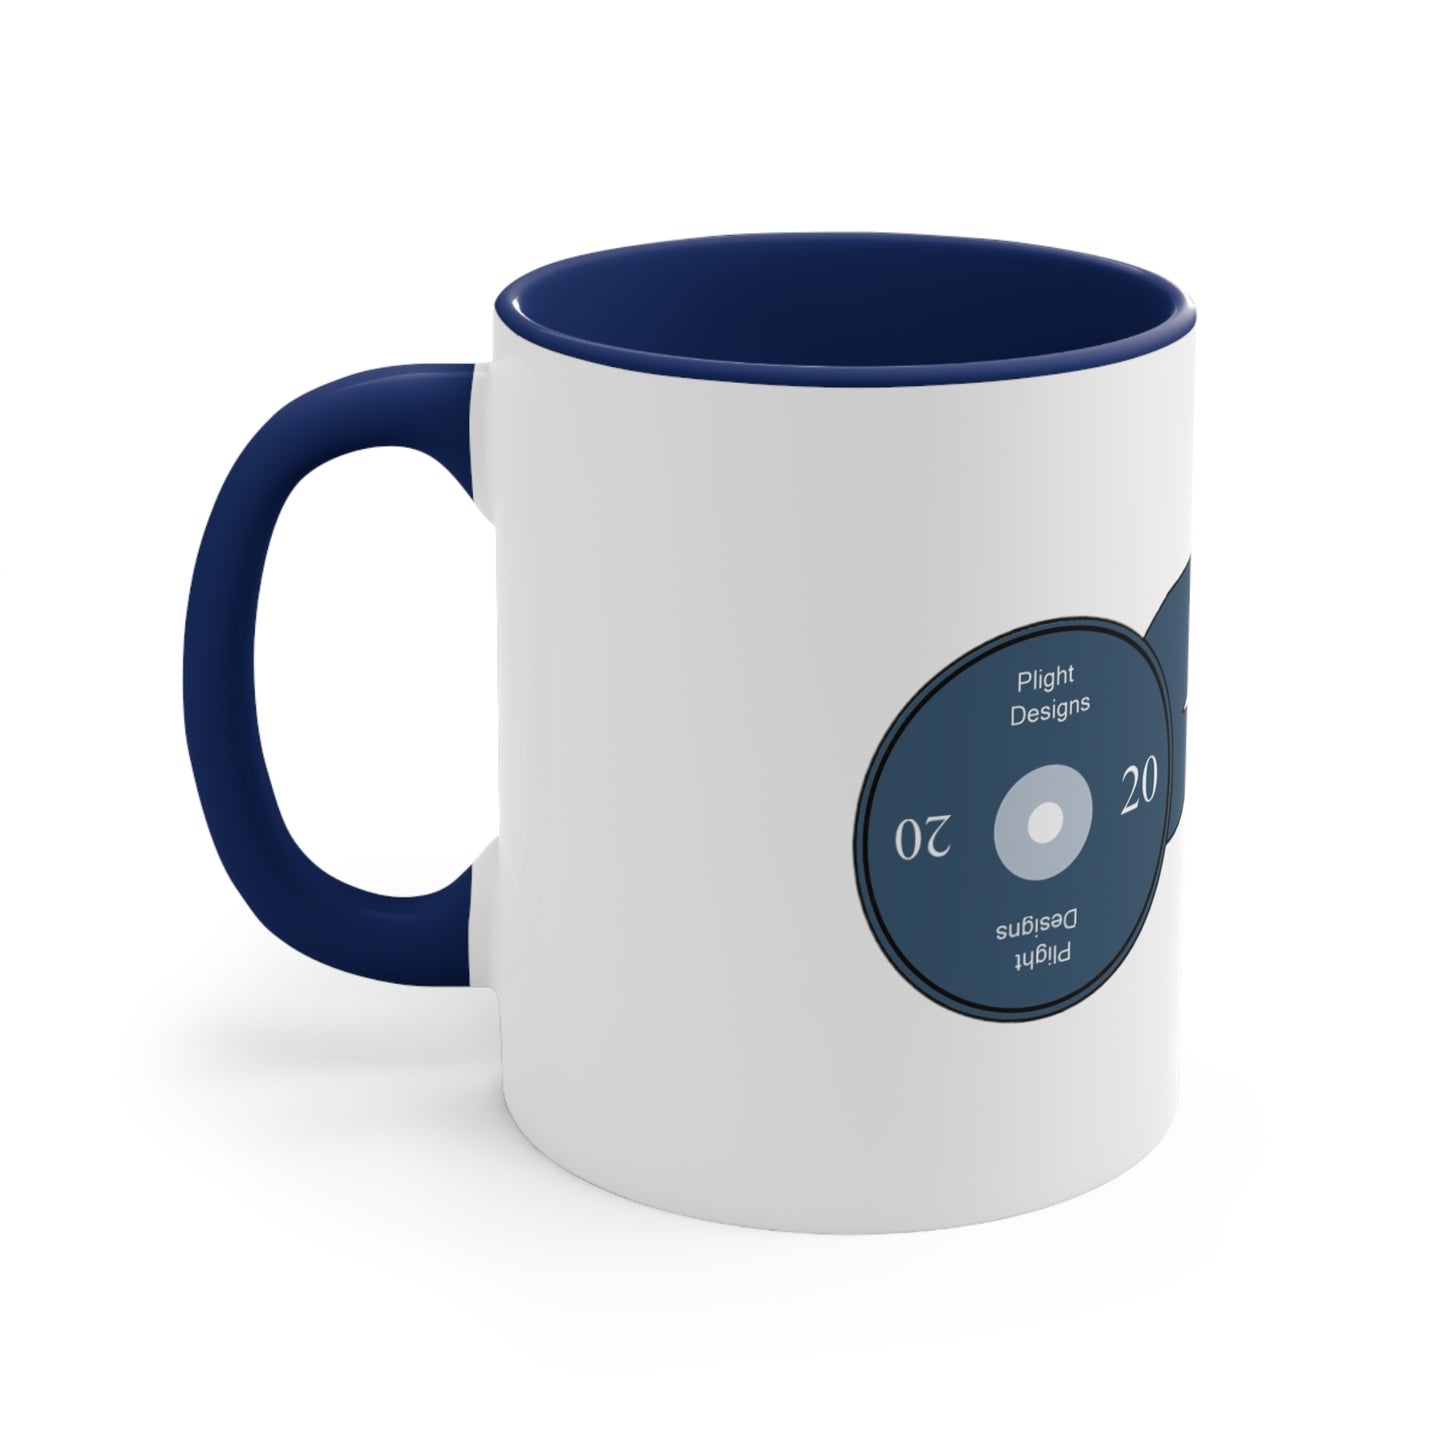 Only PRs Accent Coffee Mug, 11oz